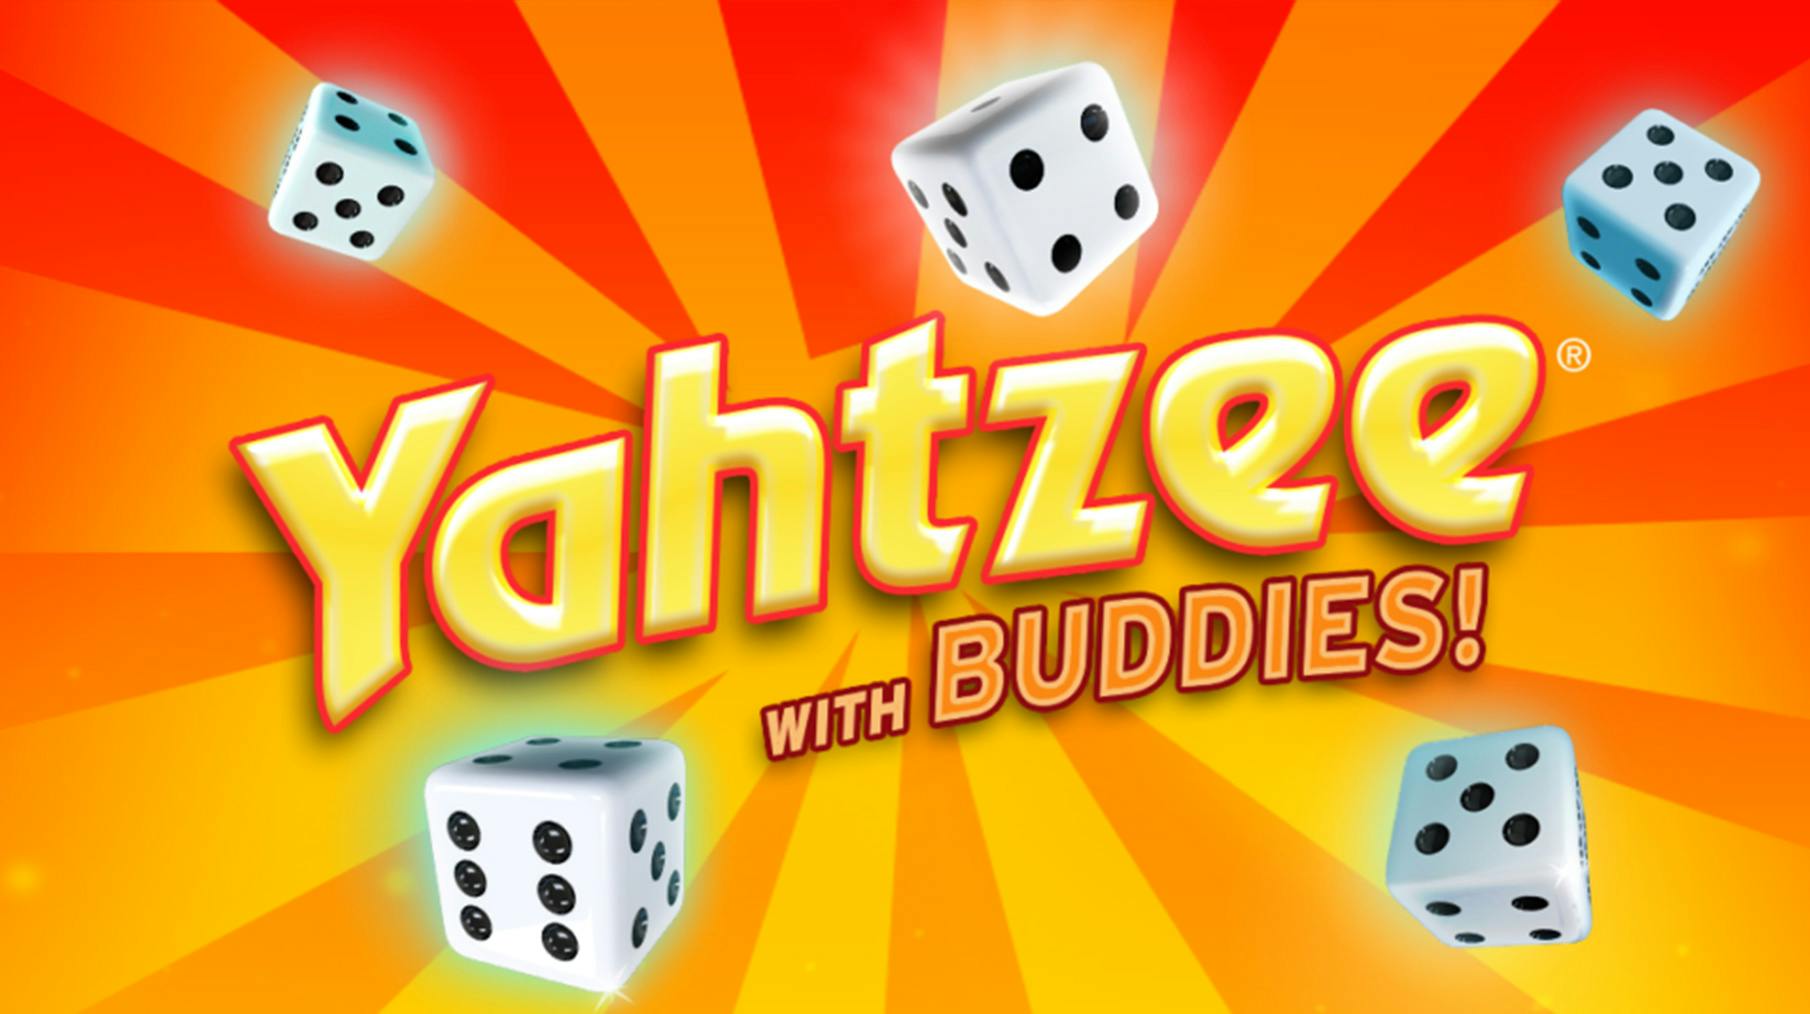 Monetization models for mobile games - Yahtzee